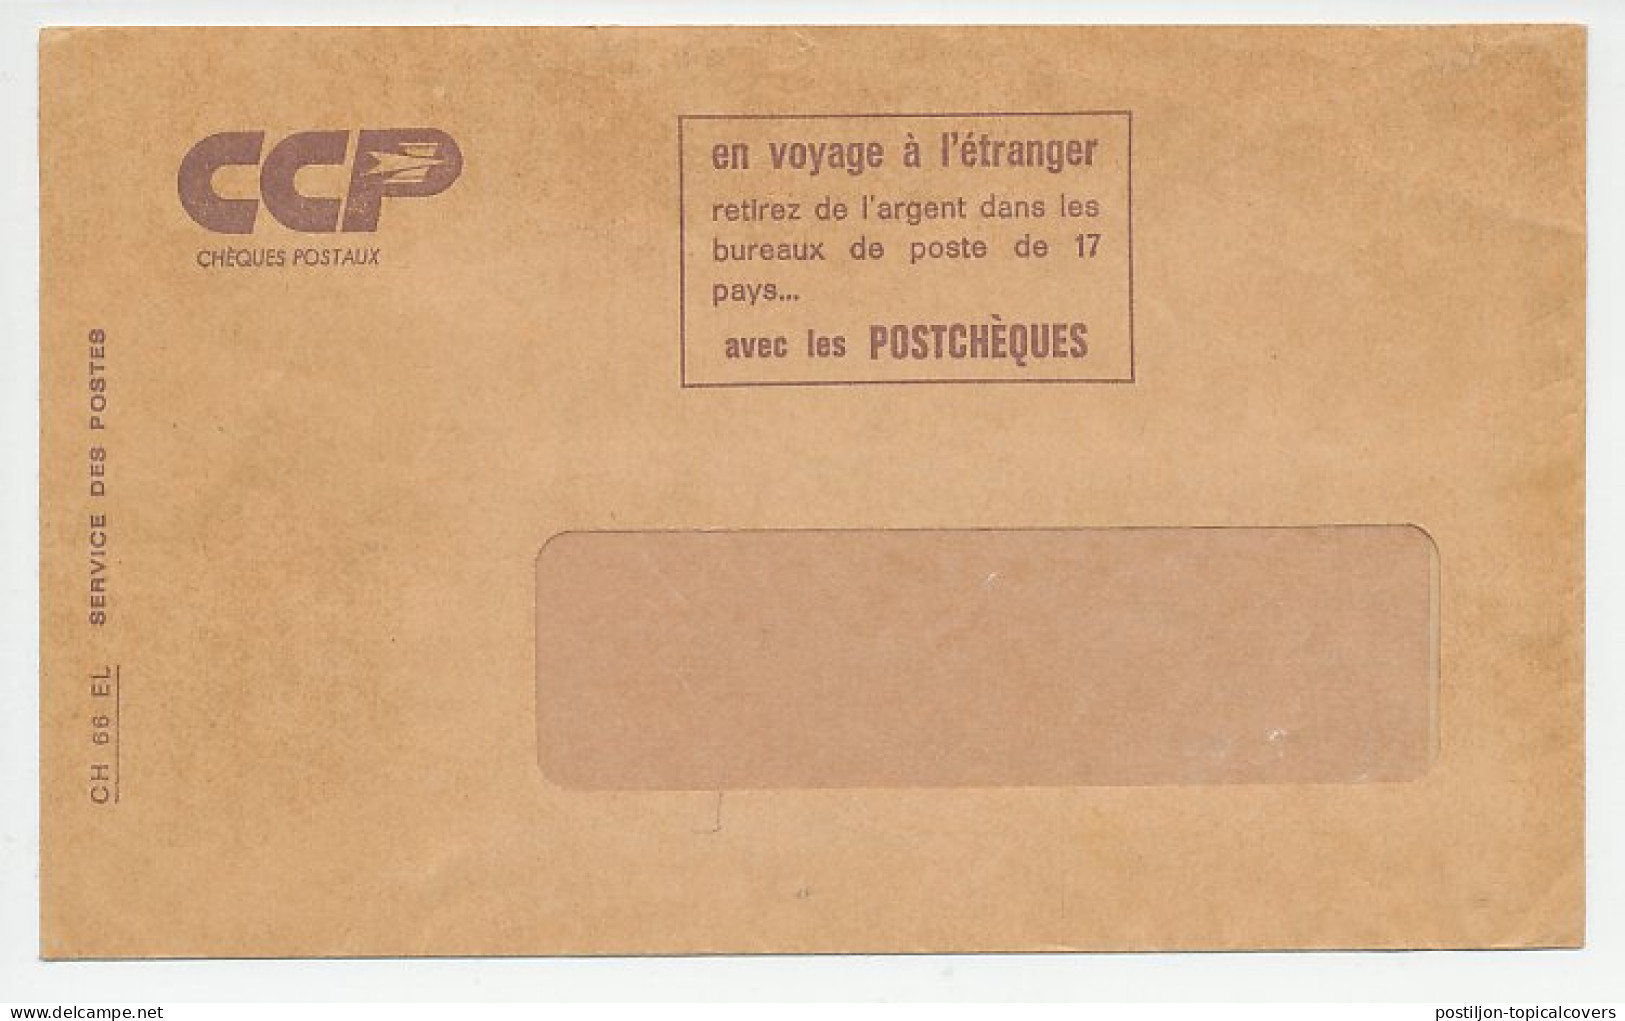 Postal Cheque Cover France Photographic Film - Fotografia